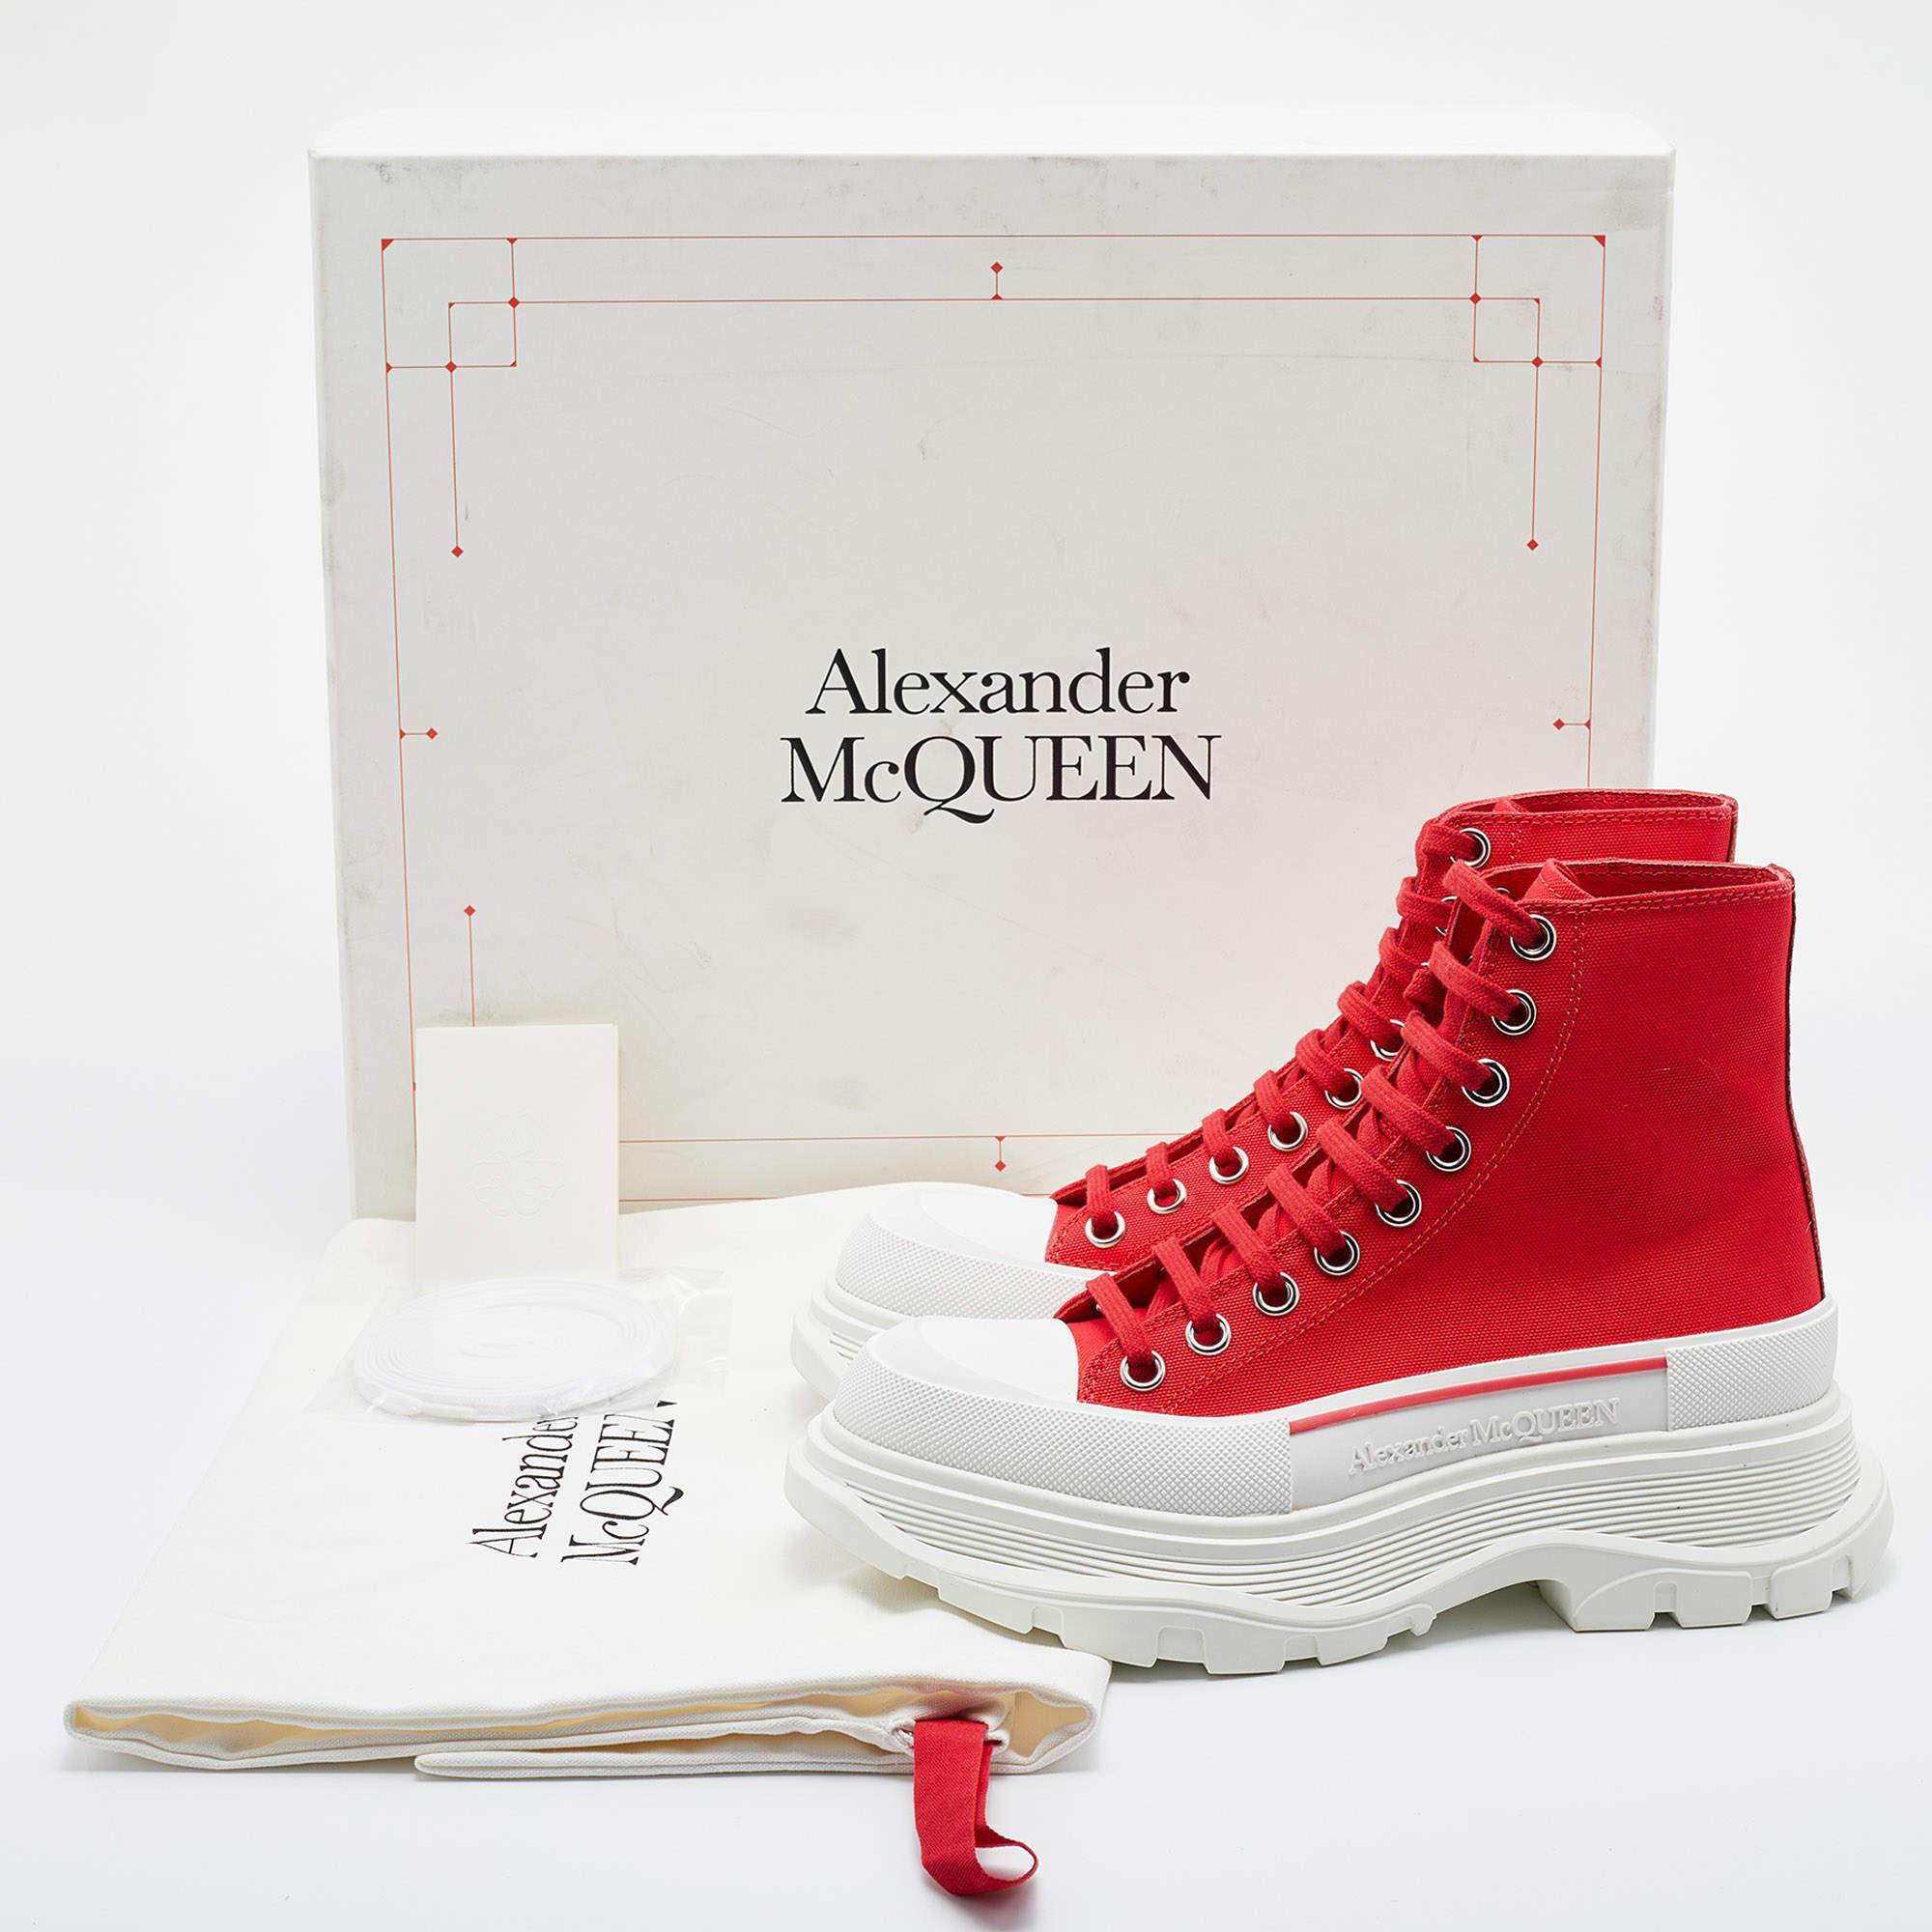 Alexander McQueen Red Canvas Tread Slick High Top Sneakers Size 36 2